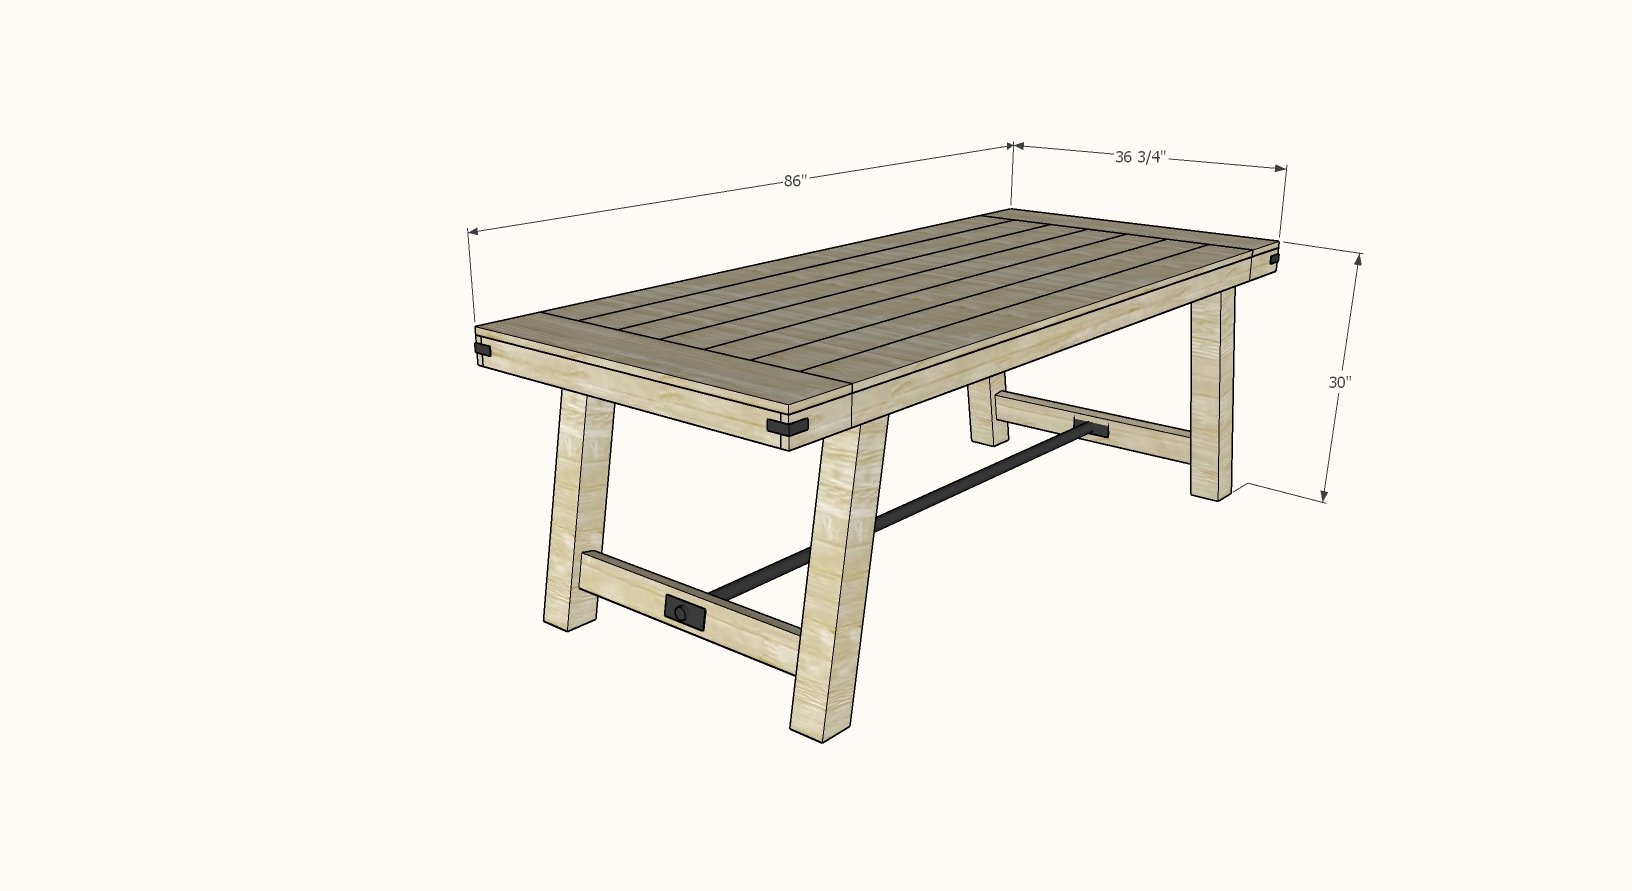 4x4 leg benchwright table